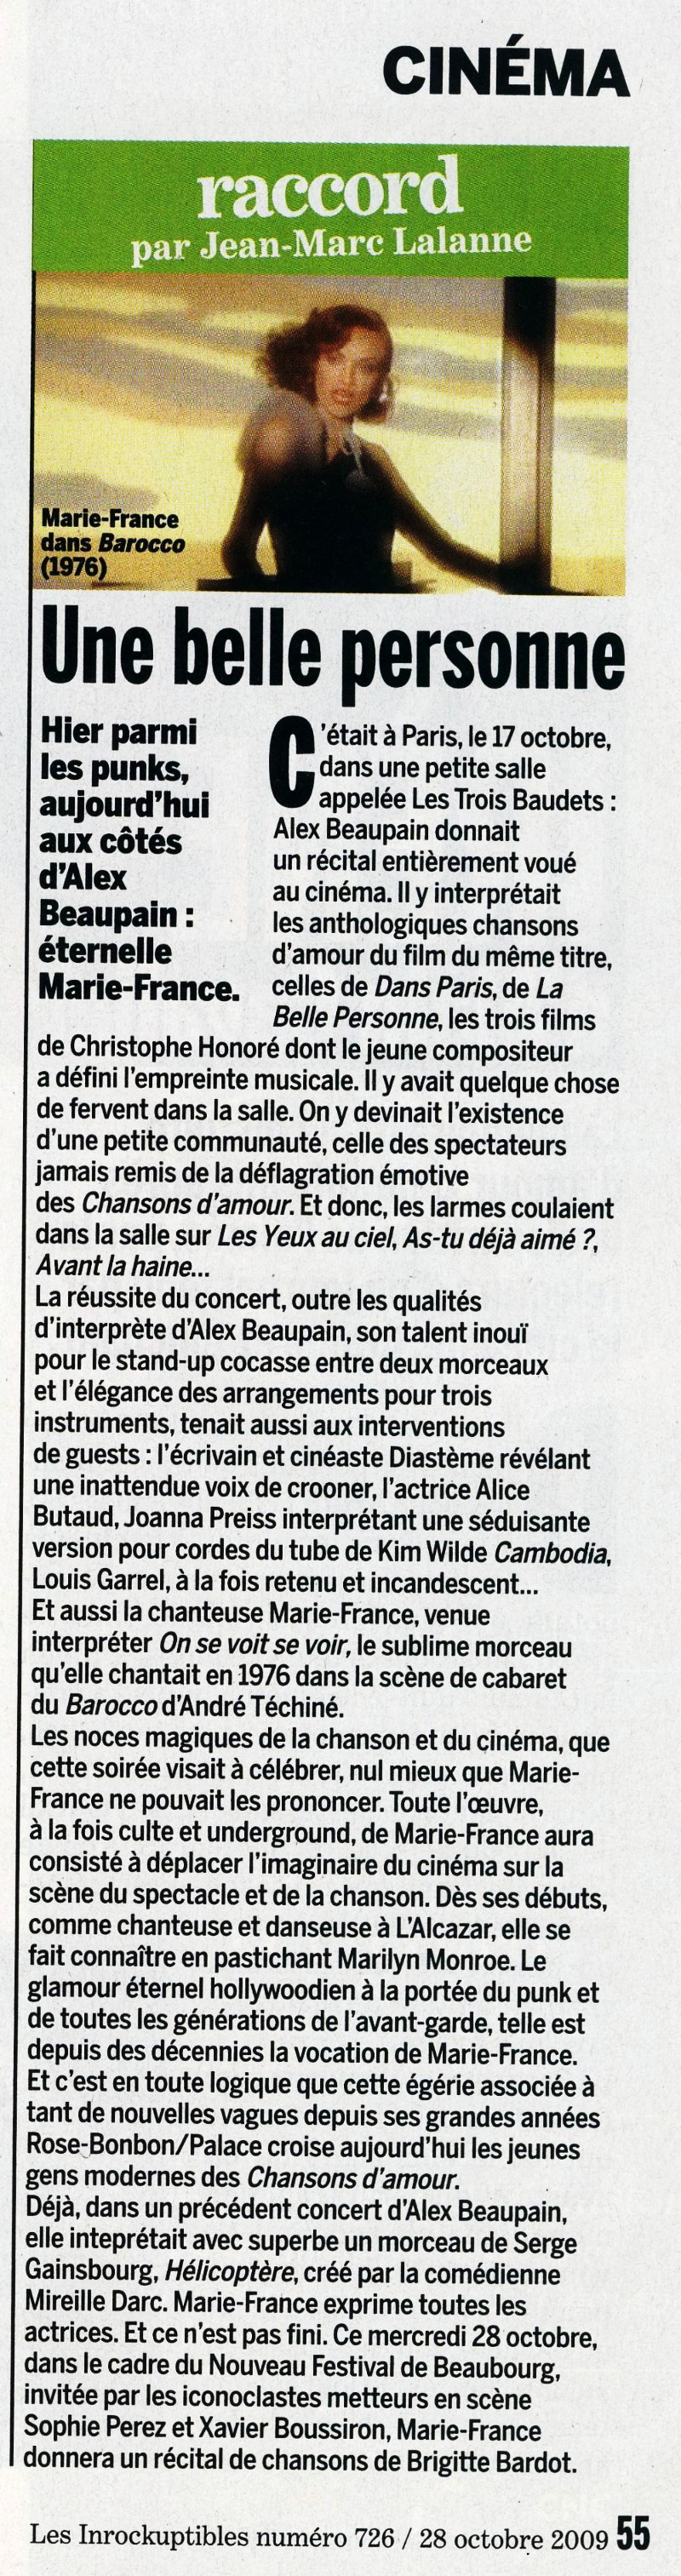 MARIE FRANCE rend hommage à l'actrice MARIE-FRANCE PISIER (25 avril 2011) 1104251125021239648050832